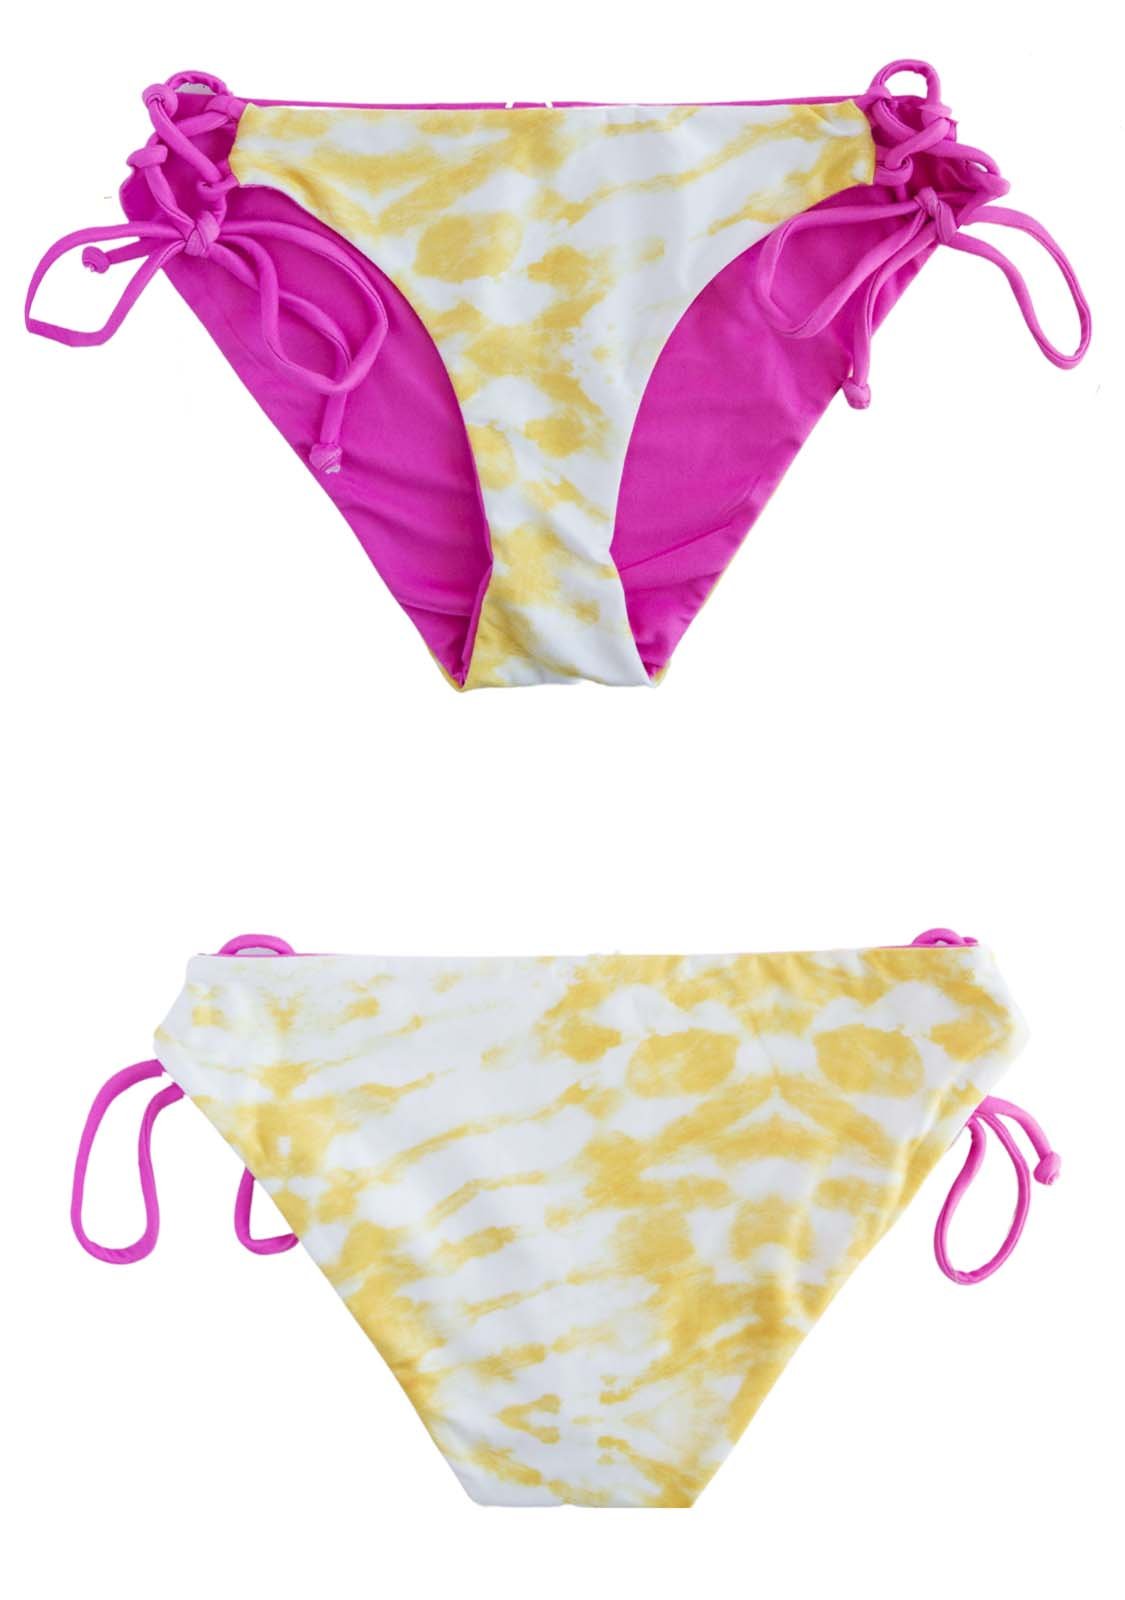 SUNRAYS - yellow-pink-white Reversible TIES BOTTOMS Bikini Bottoms Chance Loves XS 